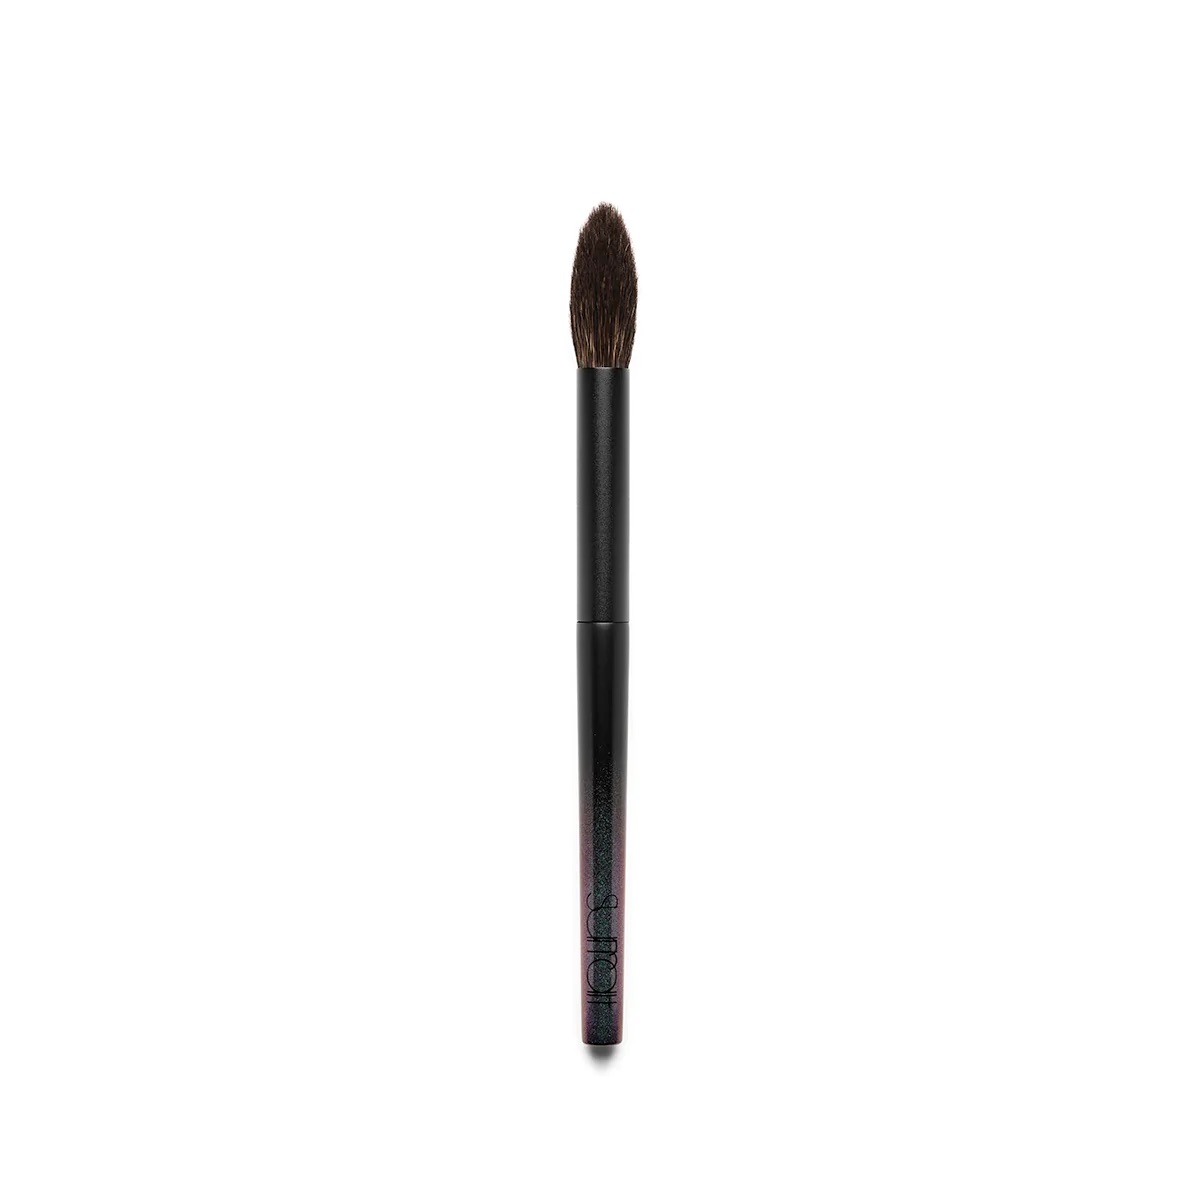 A black Surratt eyeshadow brush.